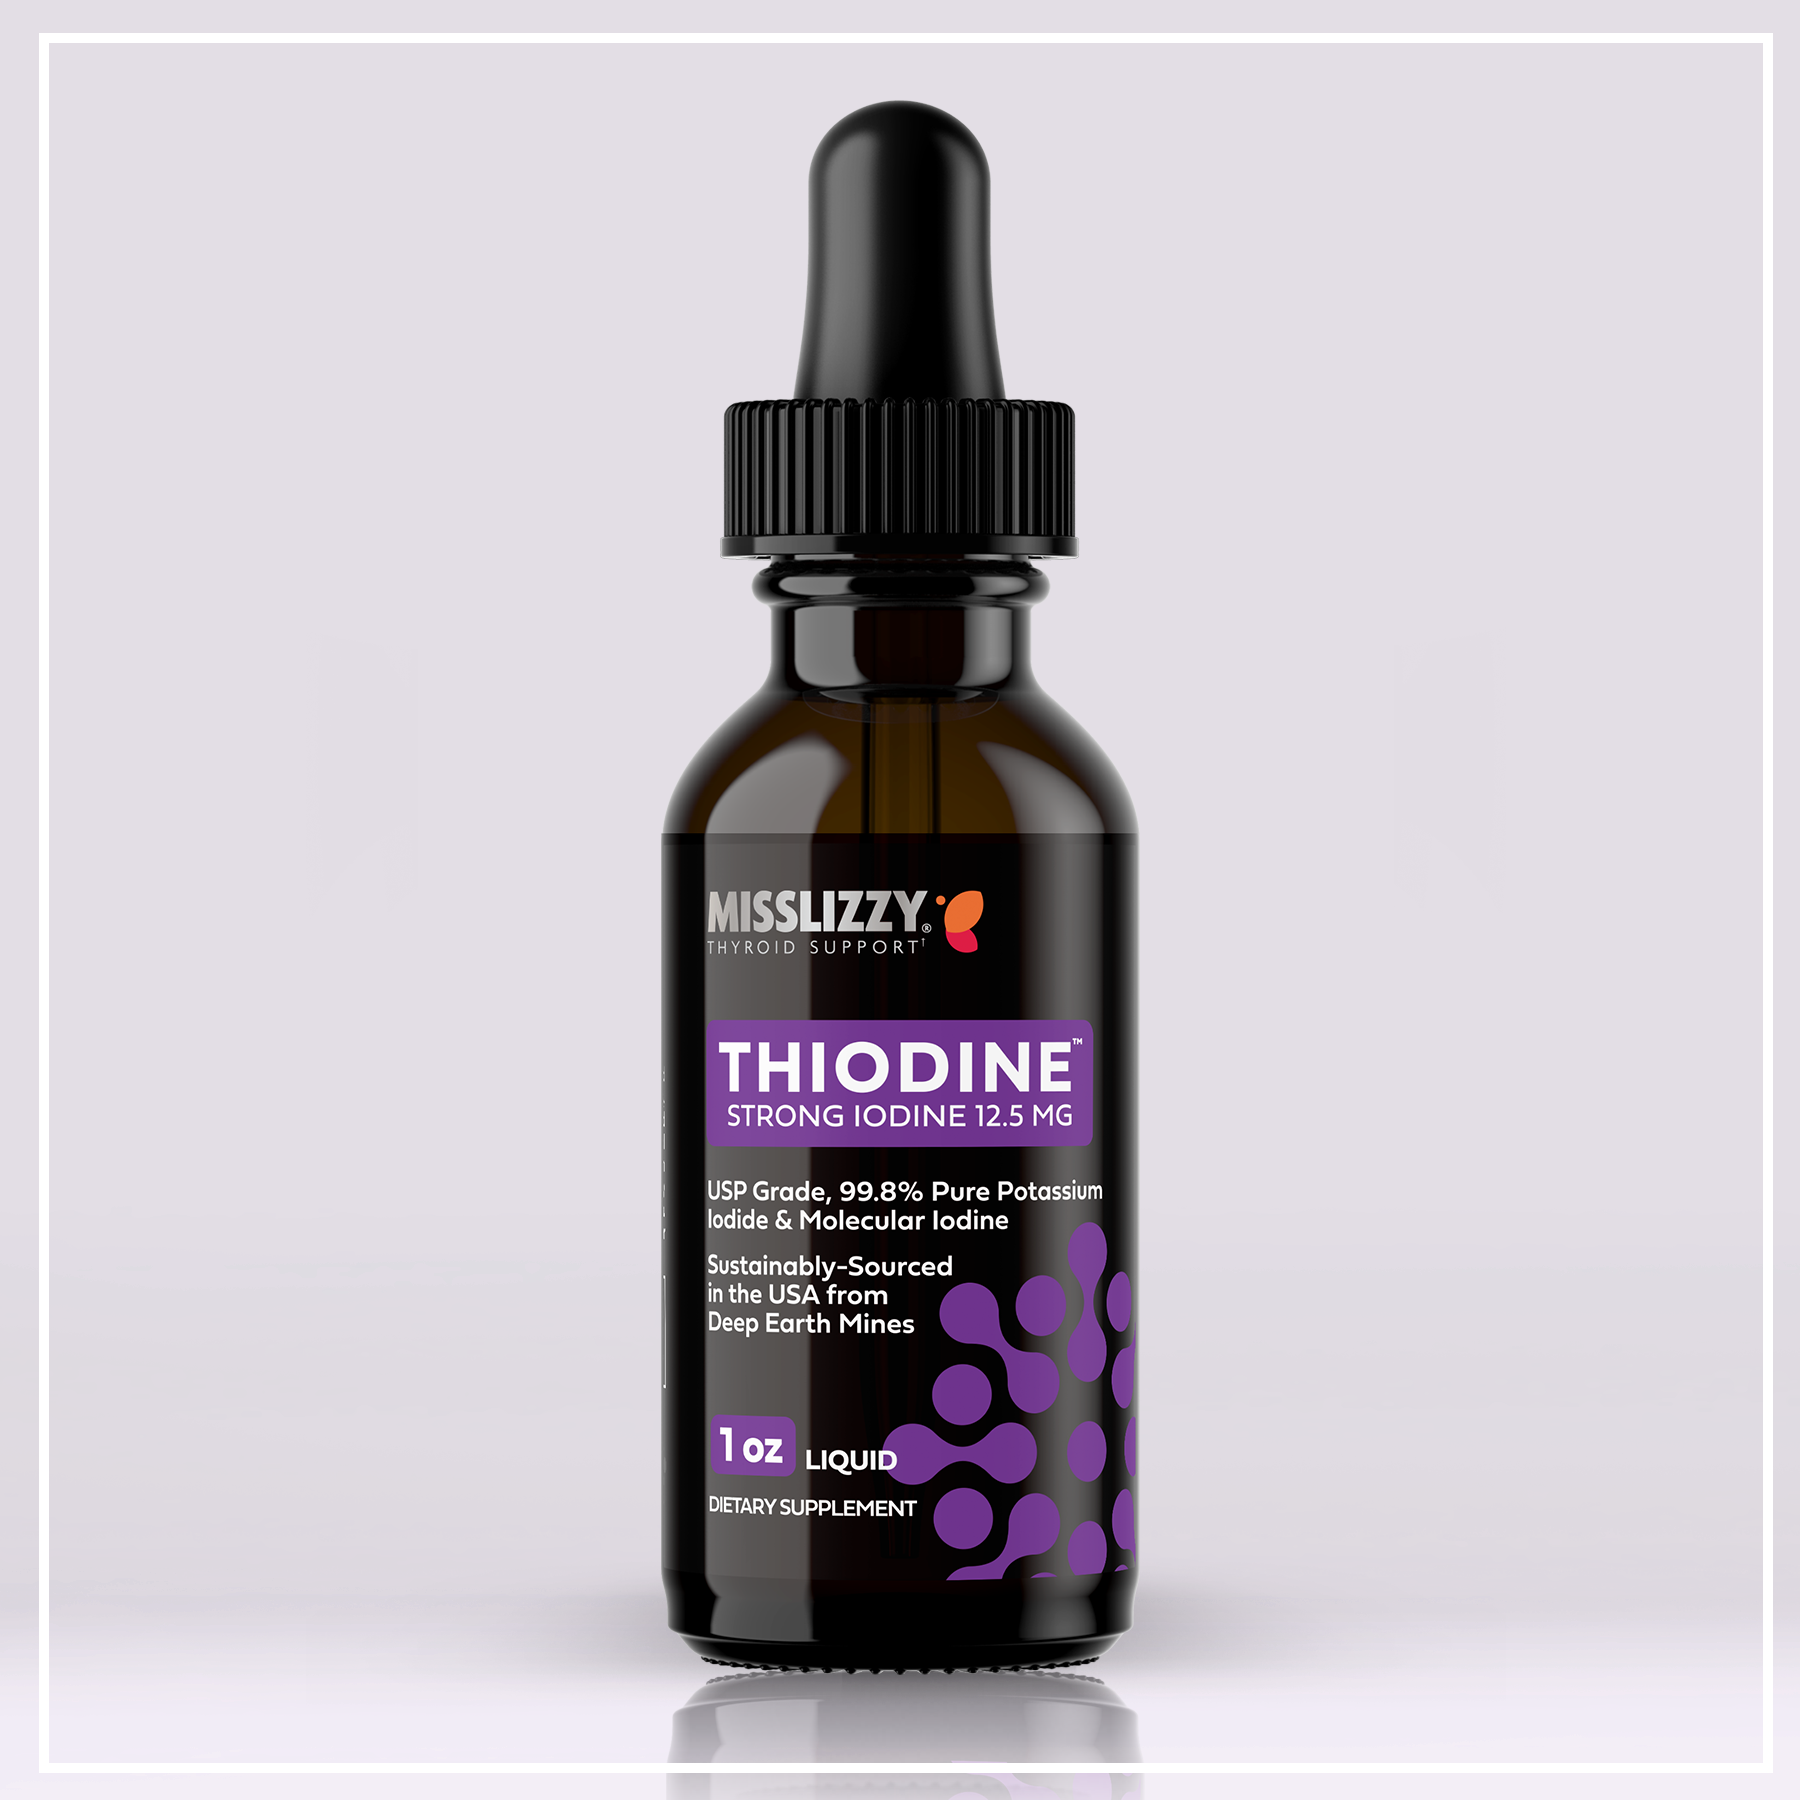 Thiodine